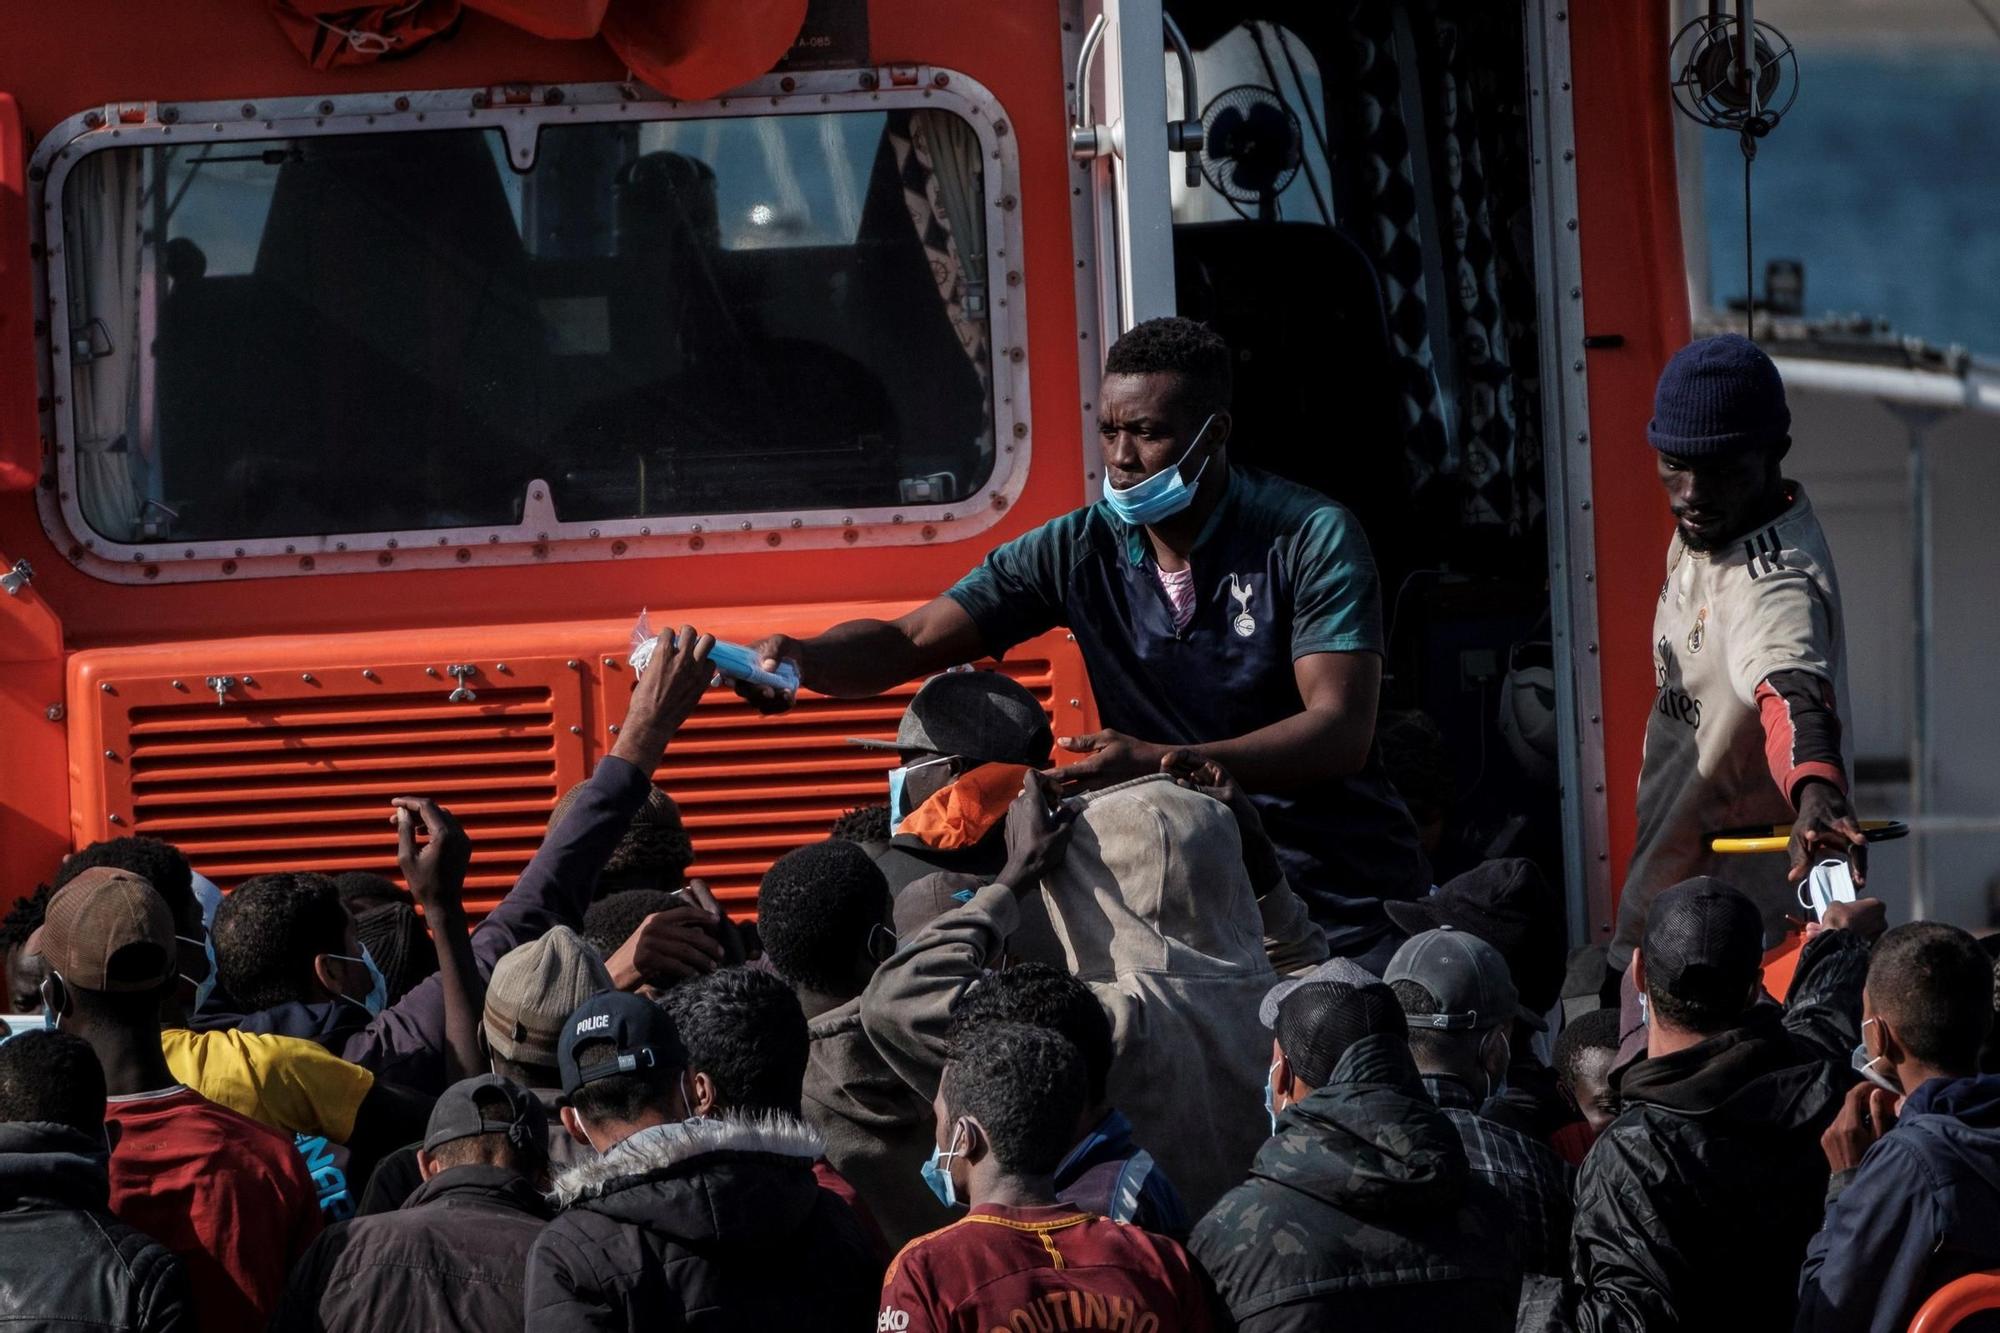 Llegada de migrantes a Arguineguín